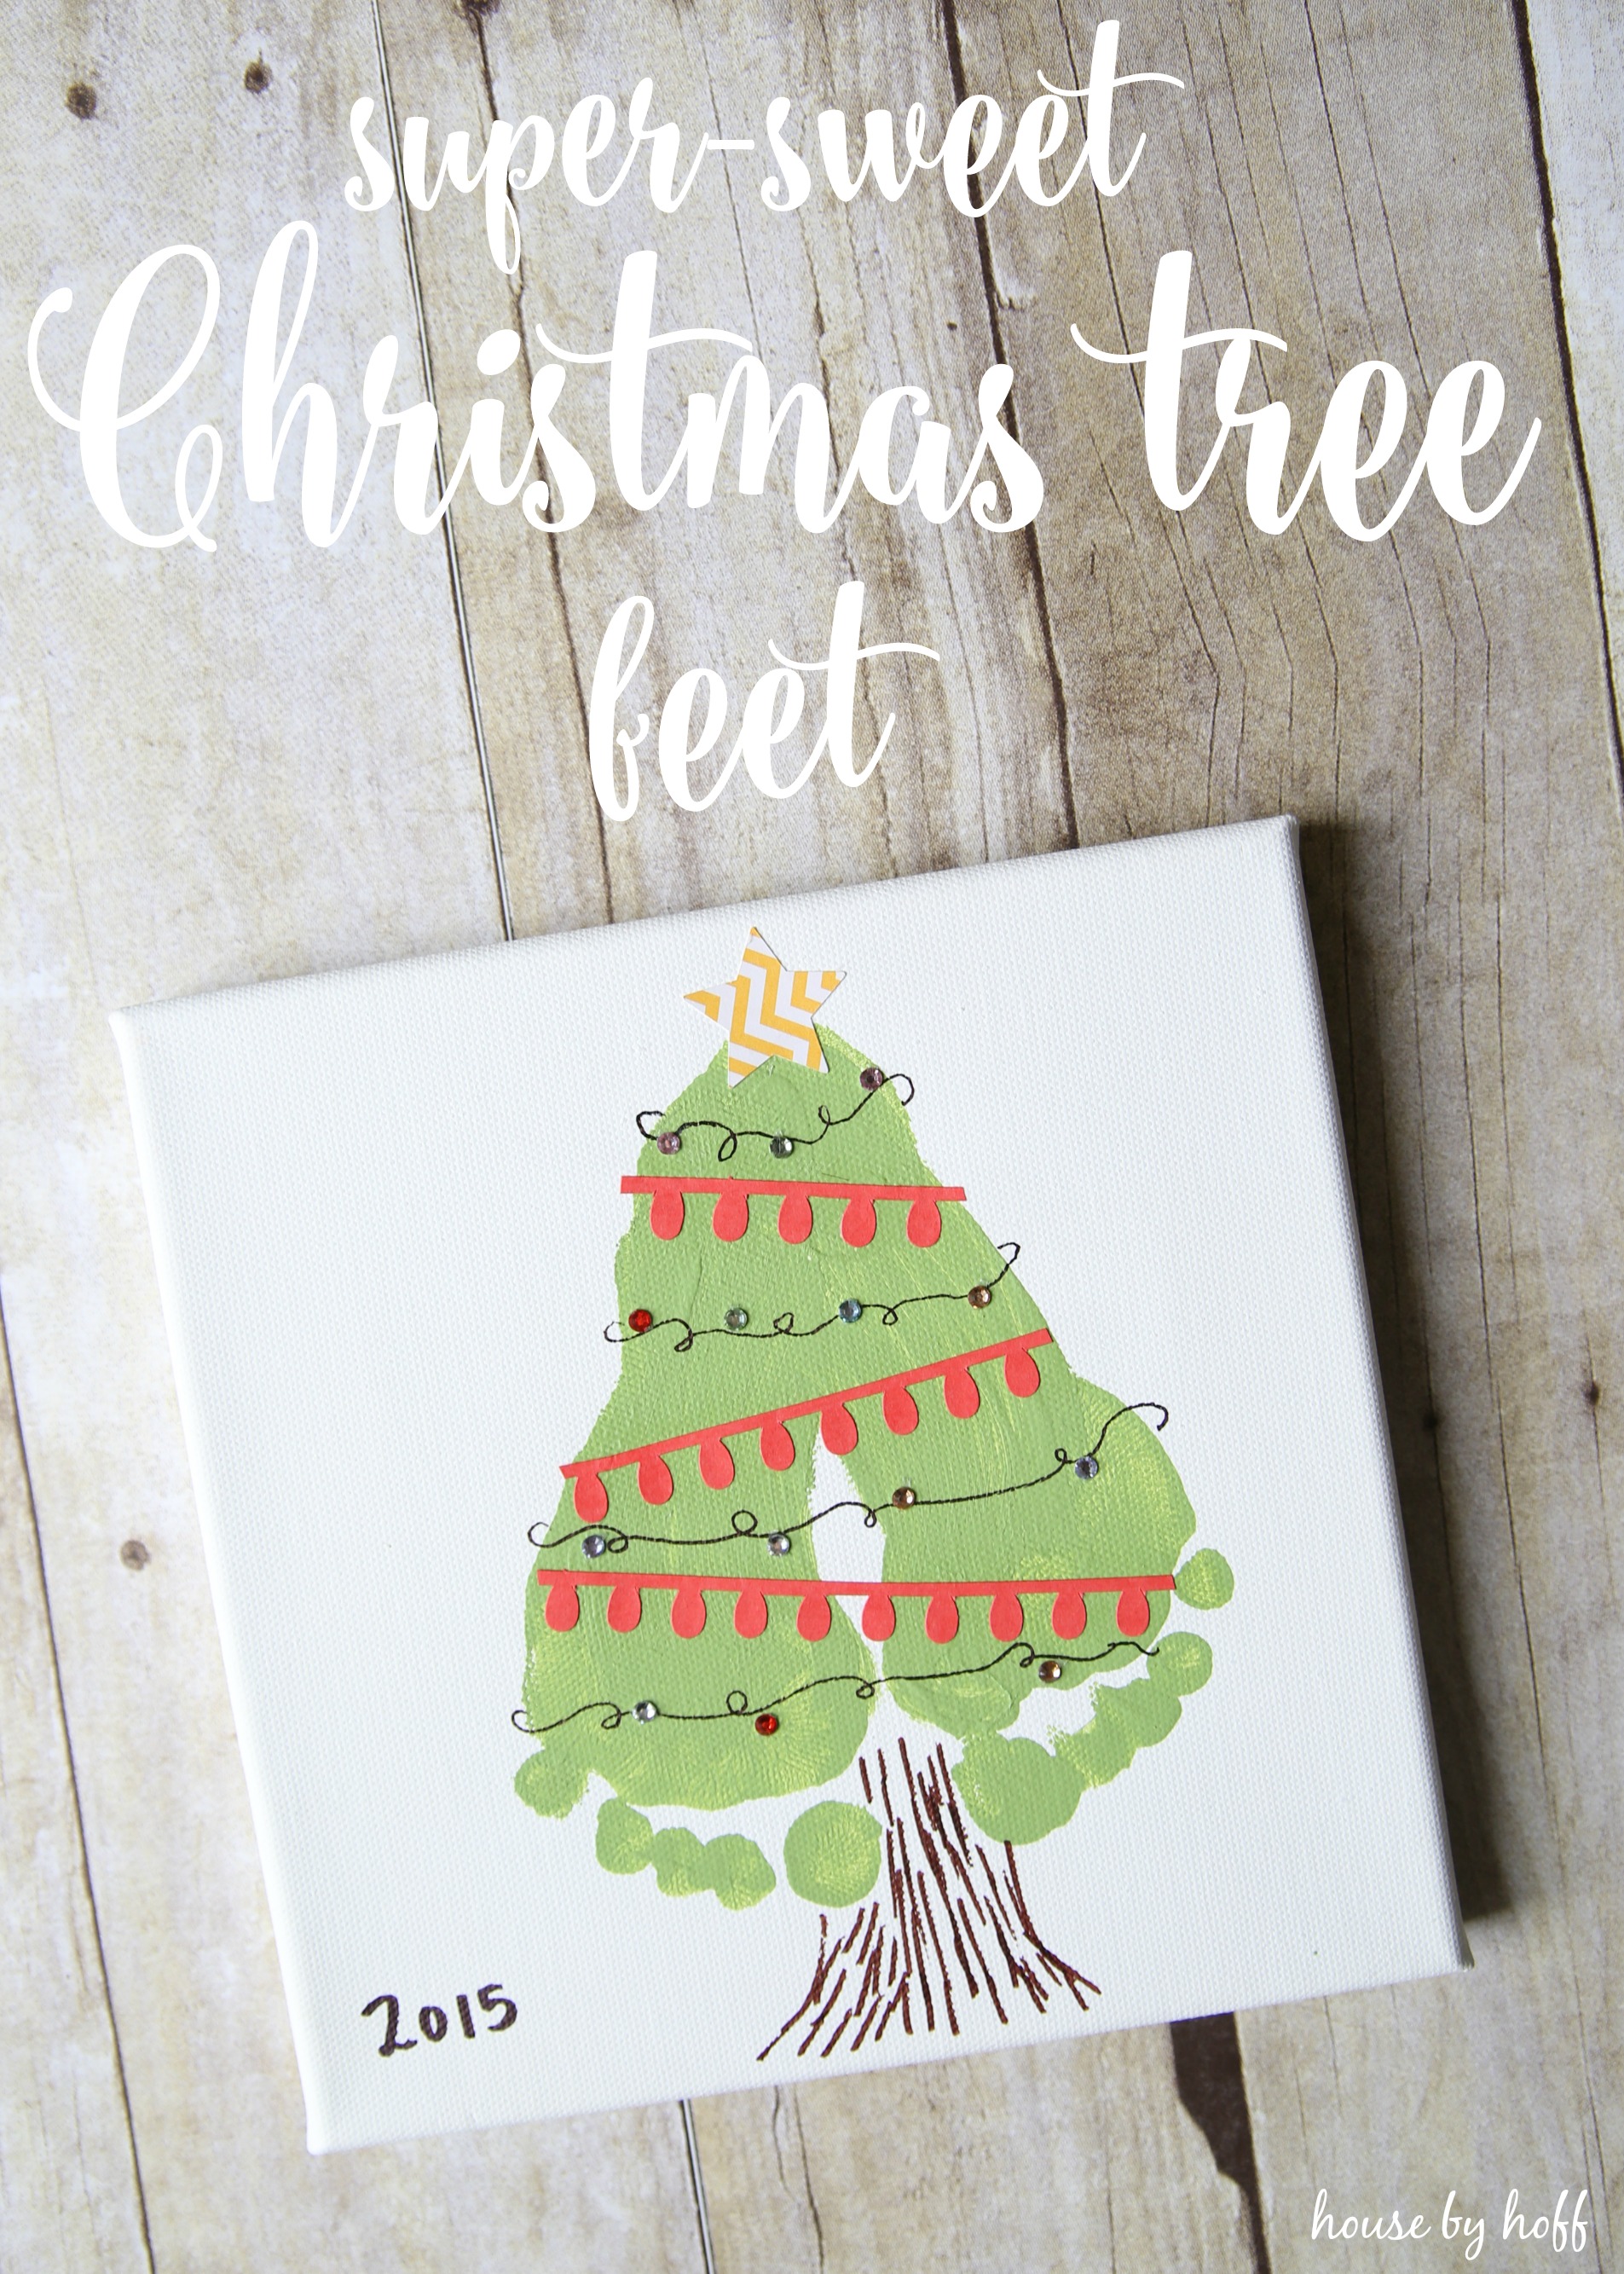 Super-Sweet Christmas Tree Feet - House by Hoff